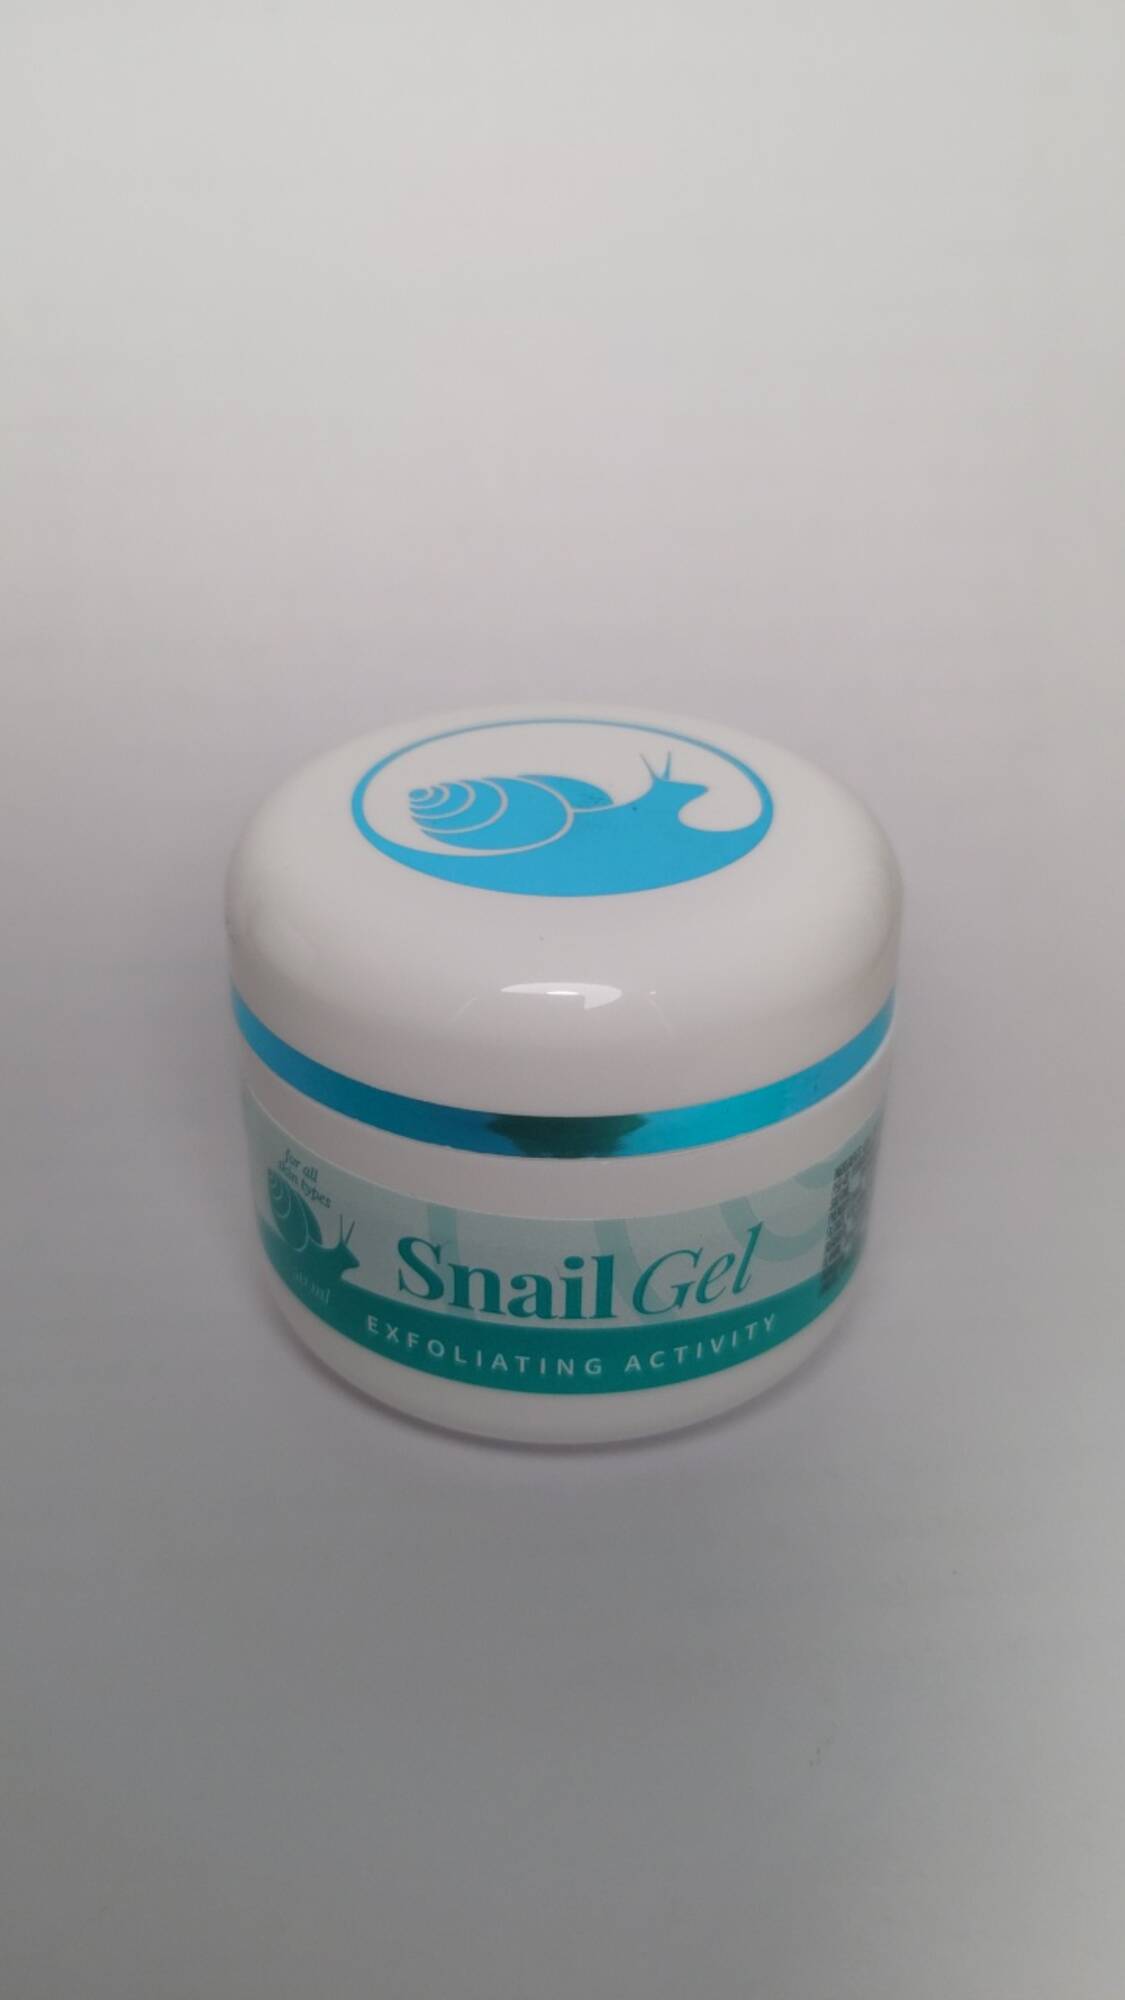 DAYES - Snail gel exfoliating activity